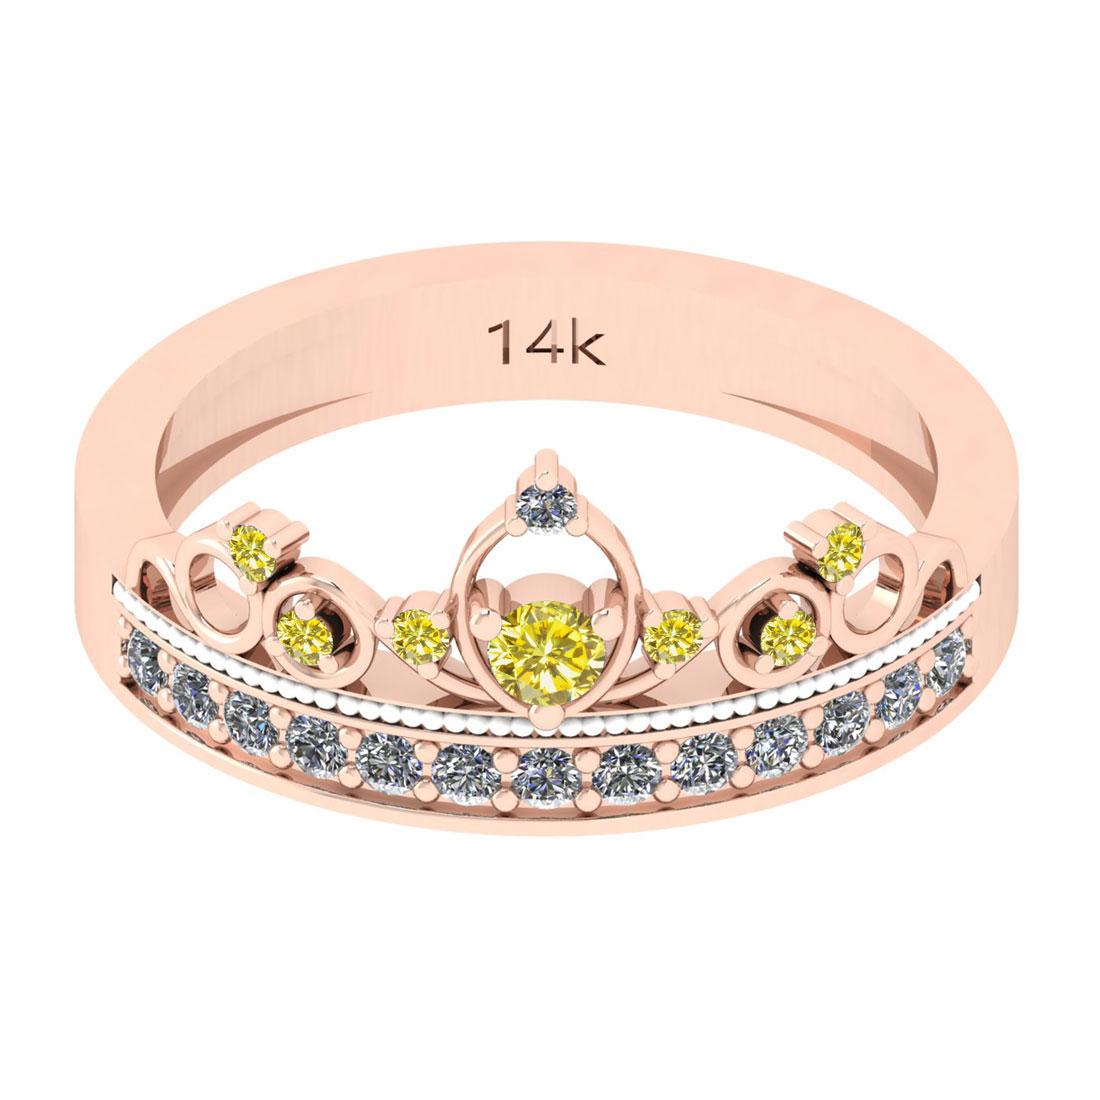 0.27 Ctw I2/I3 Treated Fancy Yellow And White Diamond 14K Rose Gold Eternity Band Ring